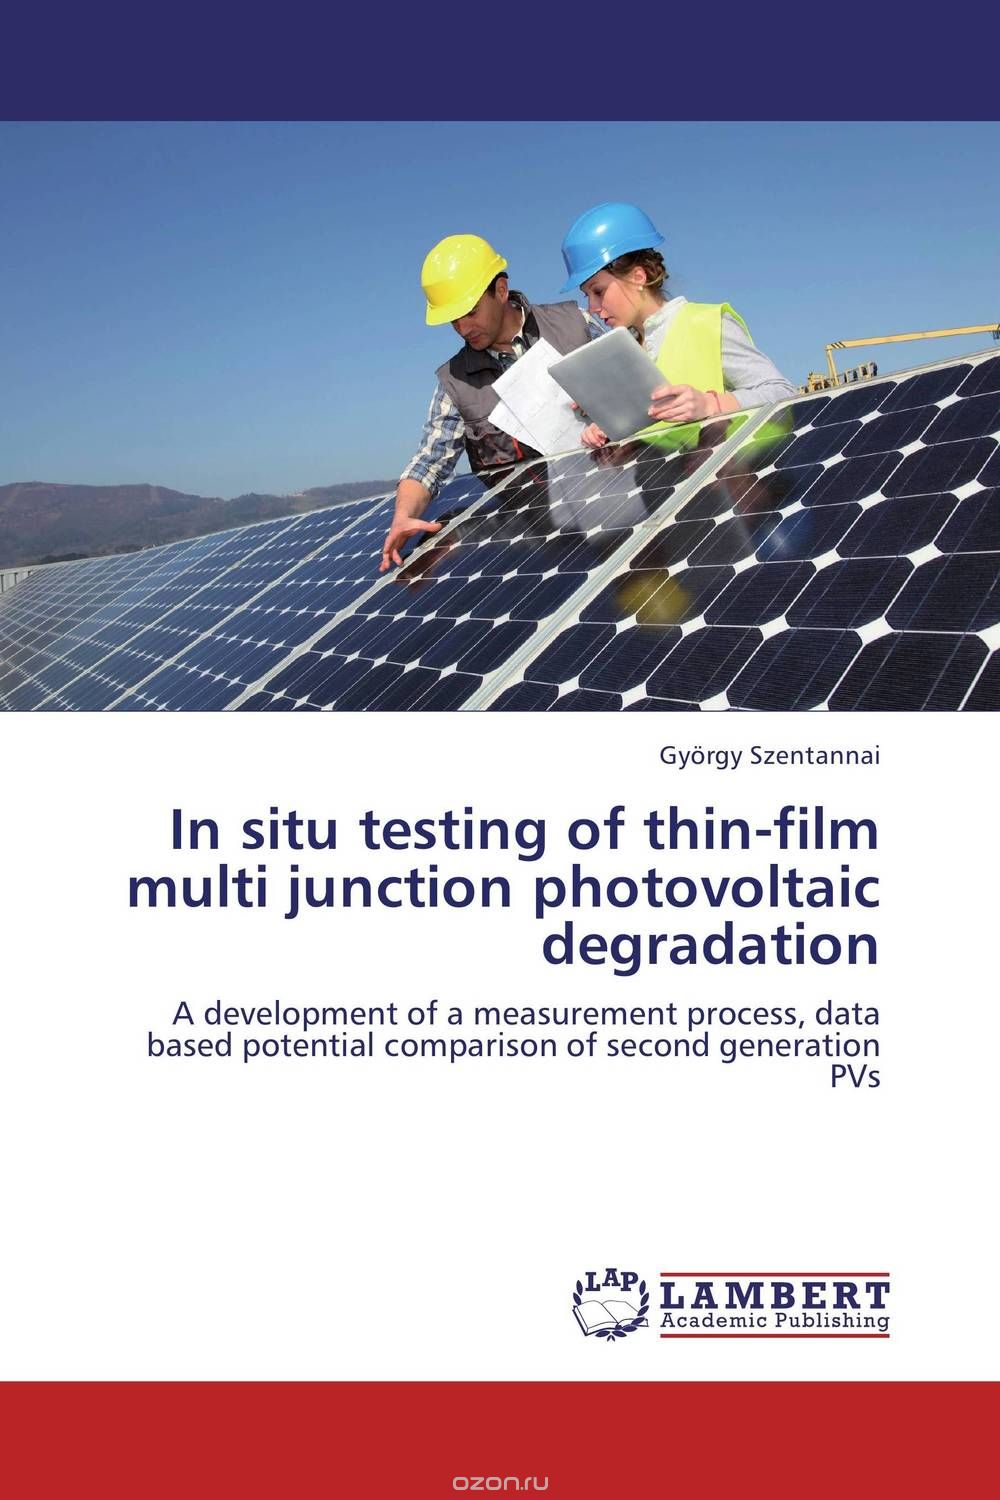 Скачать книгу "In situ testing of thin-film multi junction photovoltaic degradation"